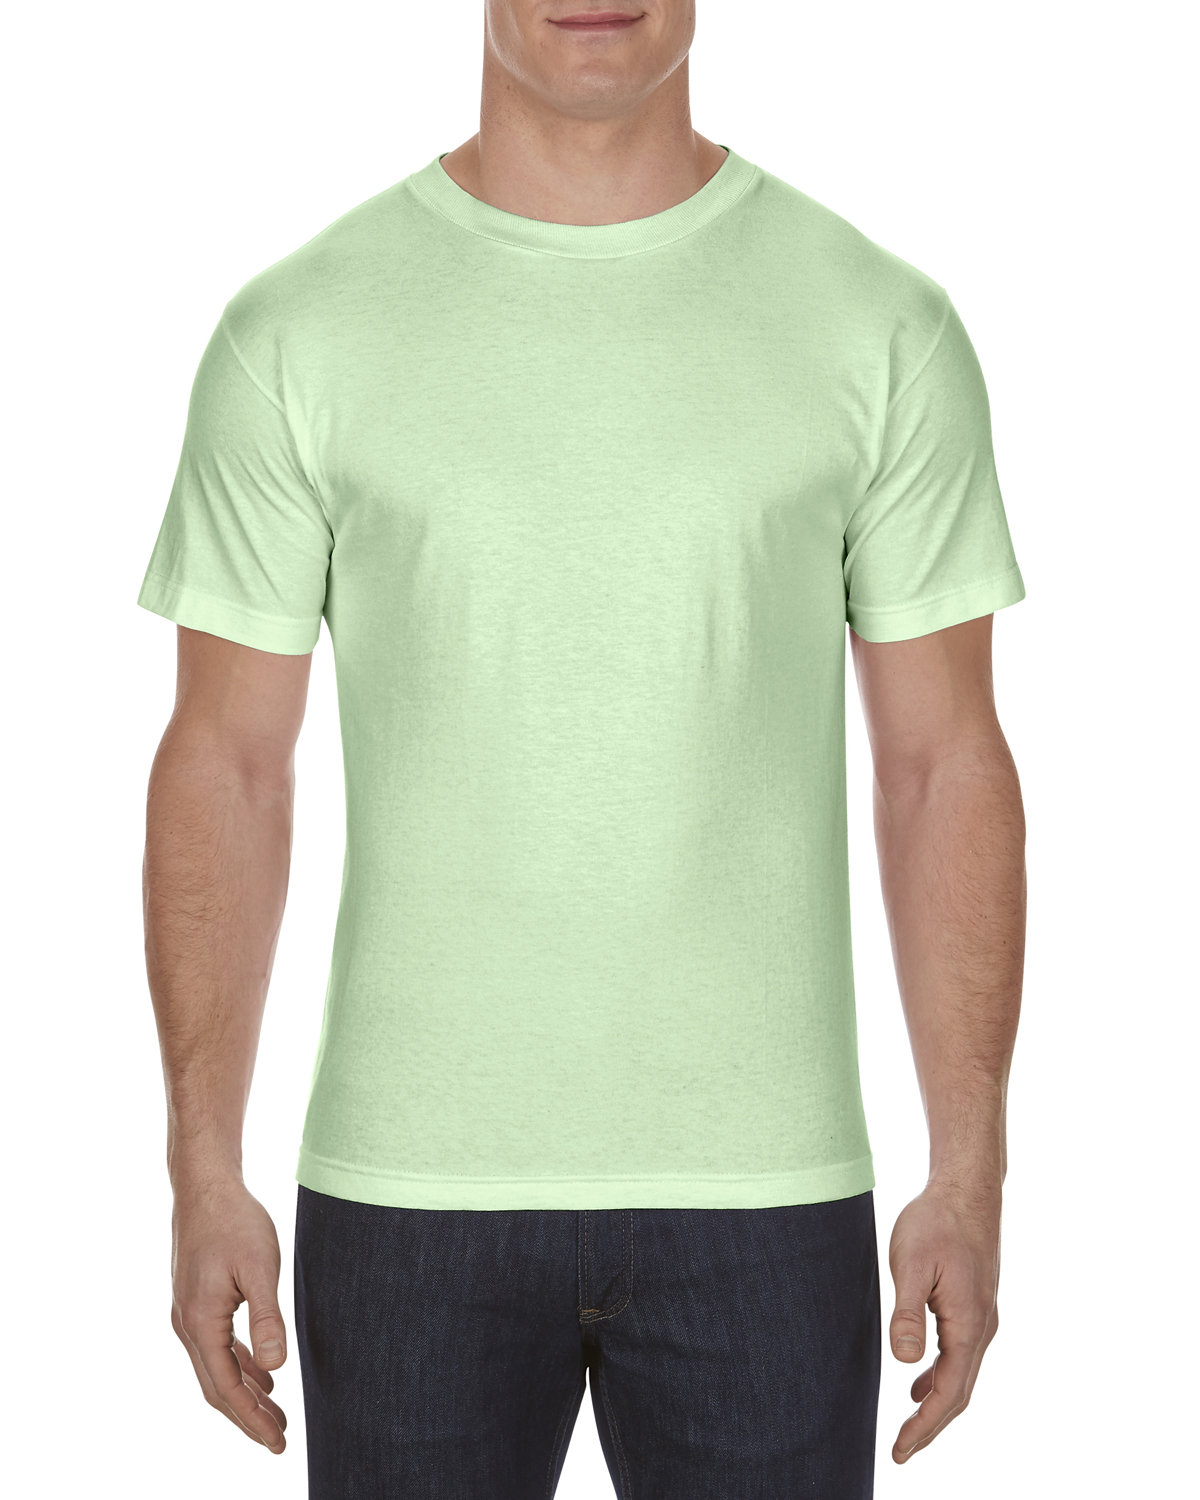 American Apparel Unisex Heavyweight Cotton T-Shirt mint 